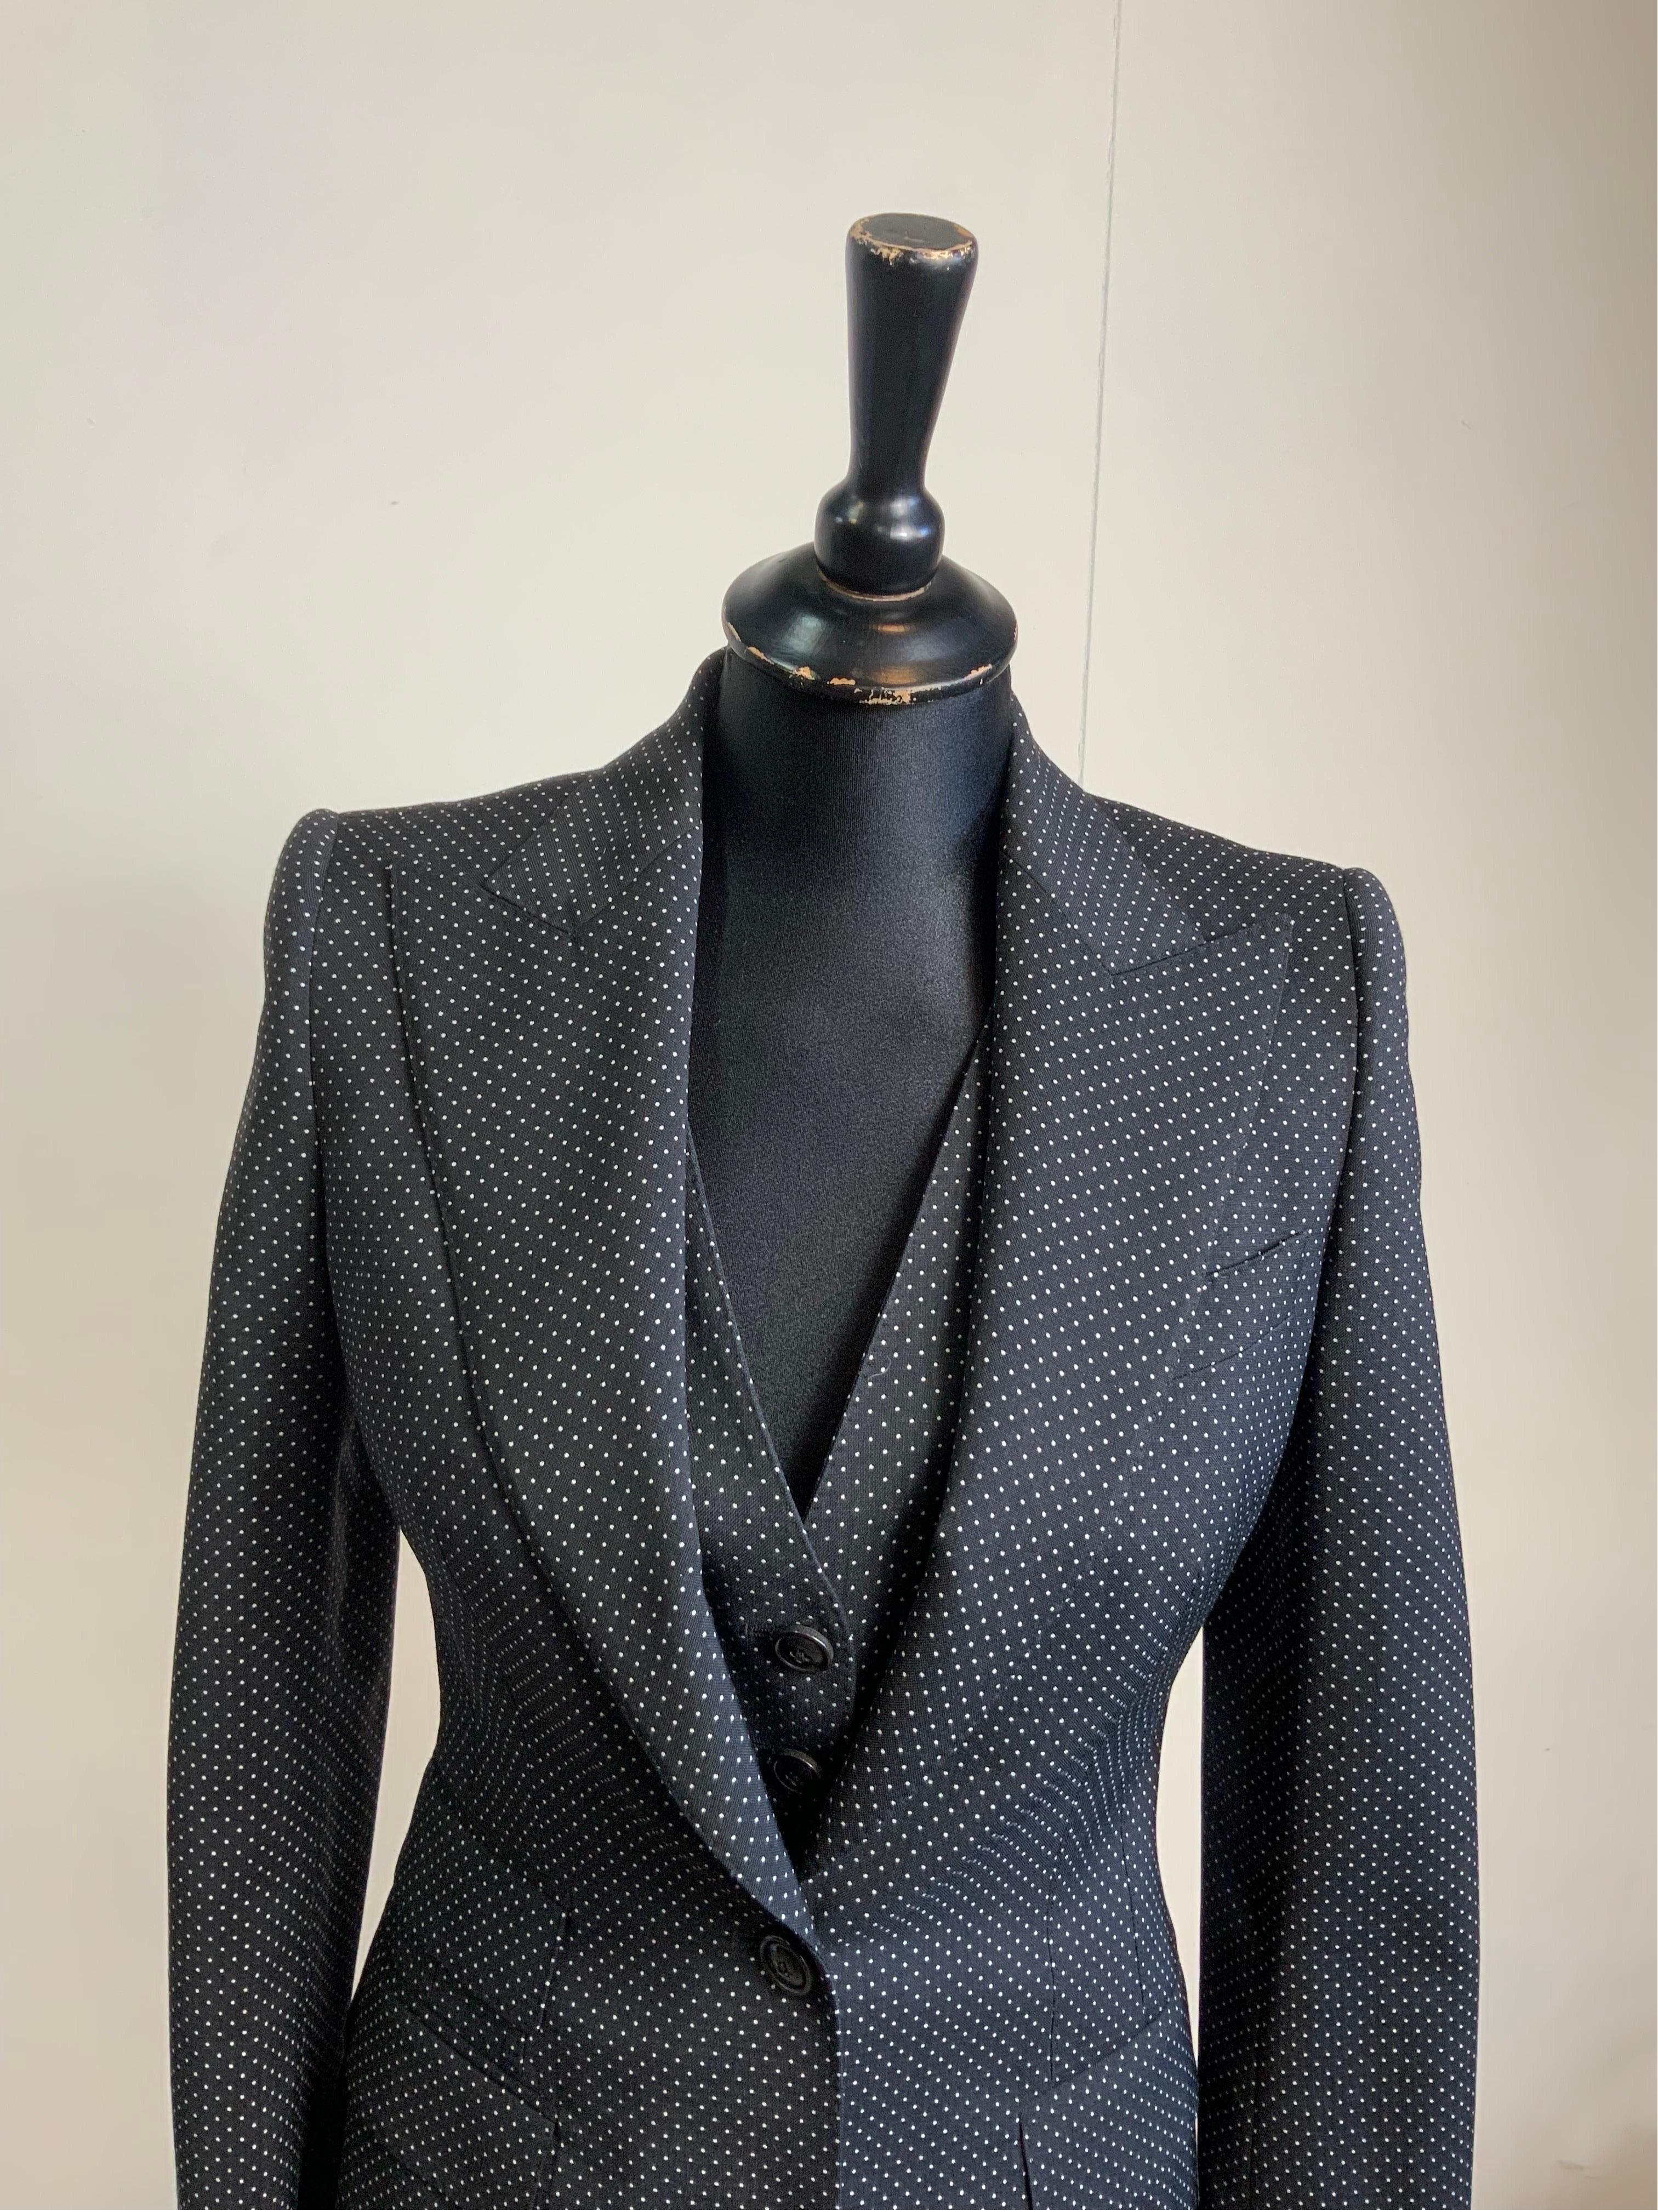 Dolce and Gabbana dots jacket + vest set.
The jacket is made of 100% virgin wool. Lined.
Italian size 36.
Shoulders 38 cm
Bust 40 cm
Length 72 cm
Sleeve 60 cm
The vest is an Italian 40.
In virgin wool and cupro. Lined.
Bust 42 cm
Length 56